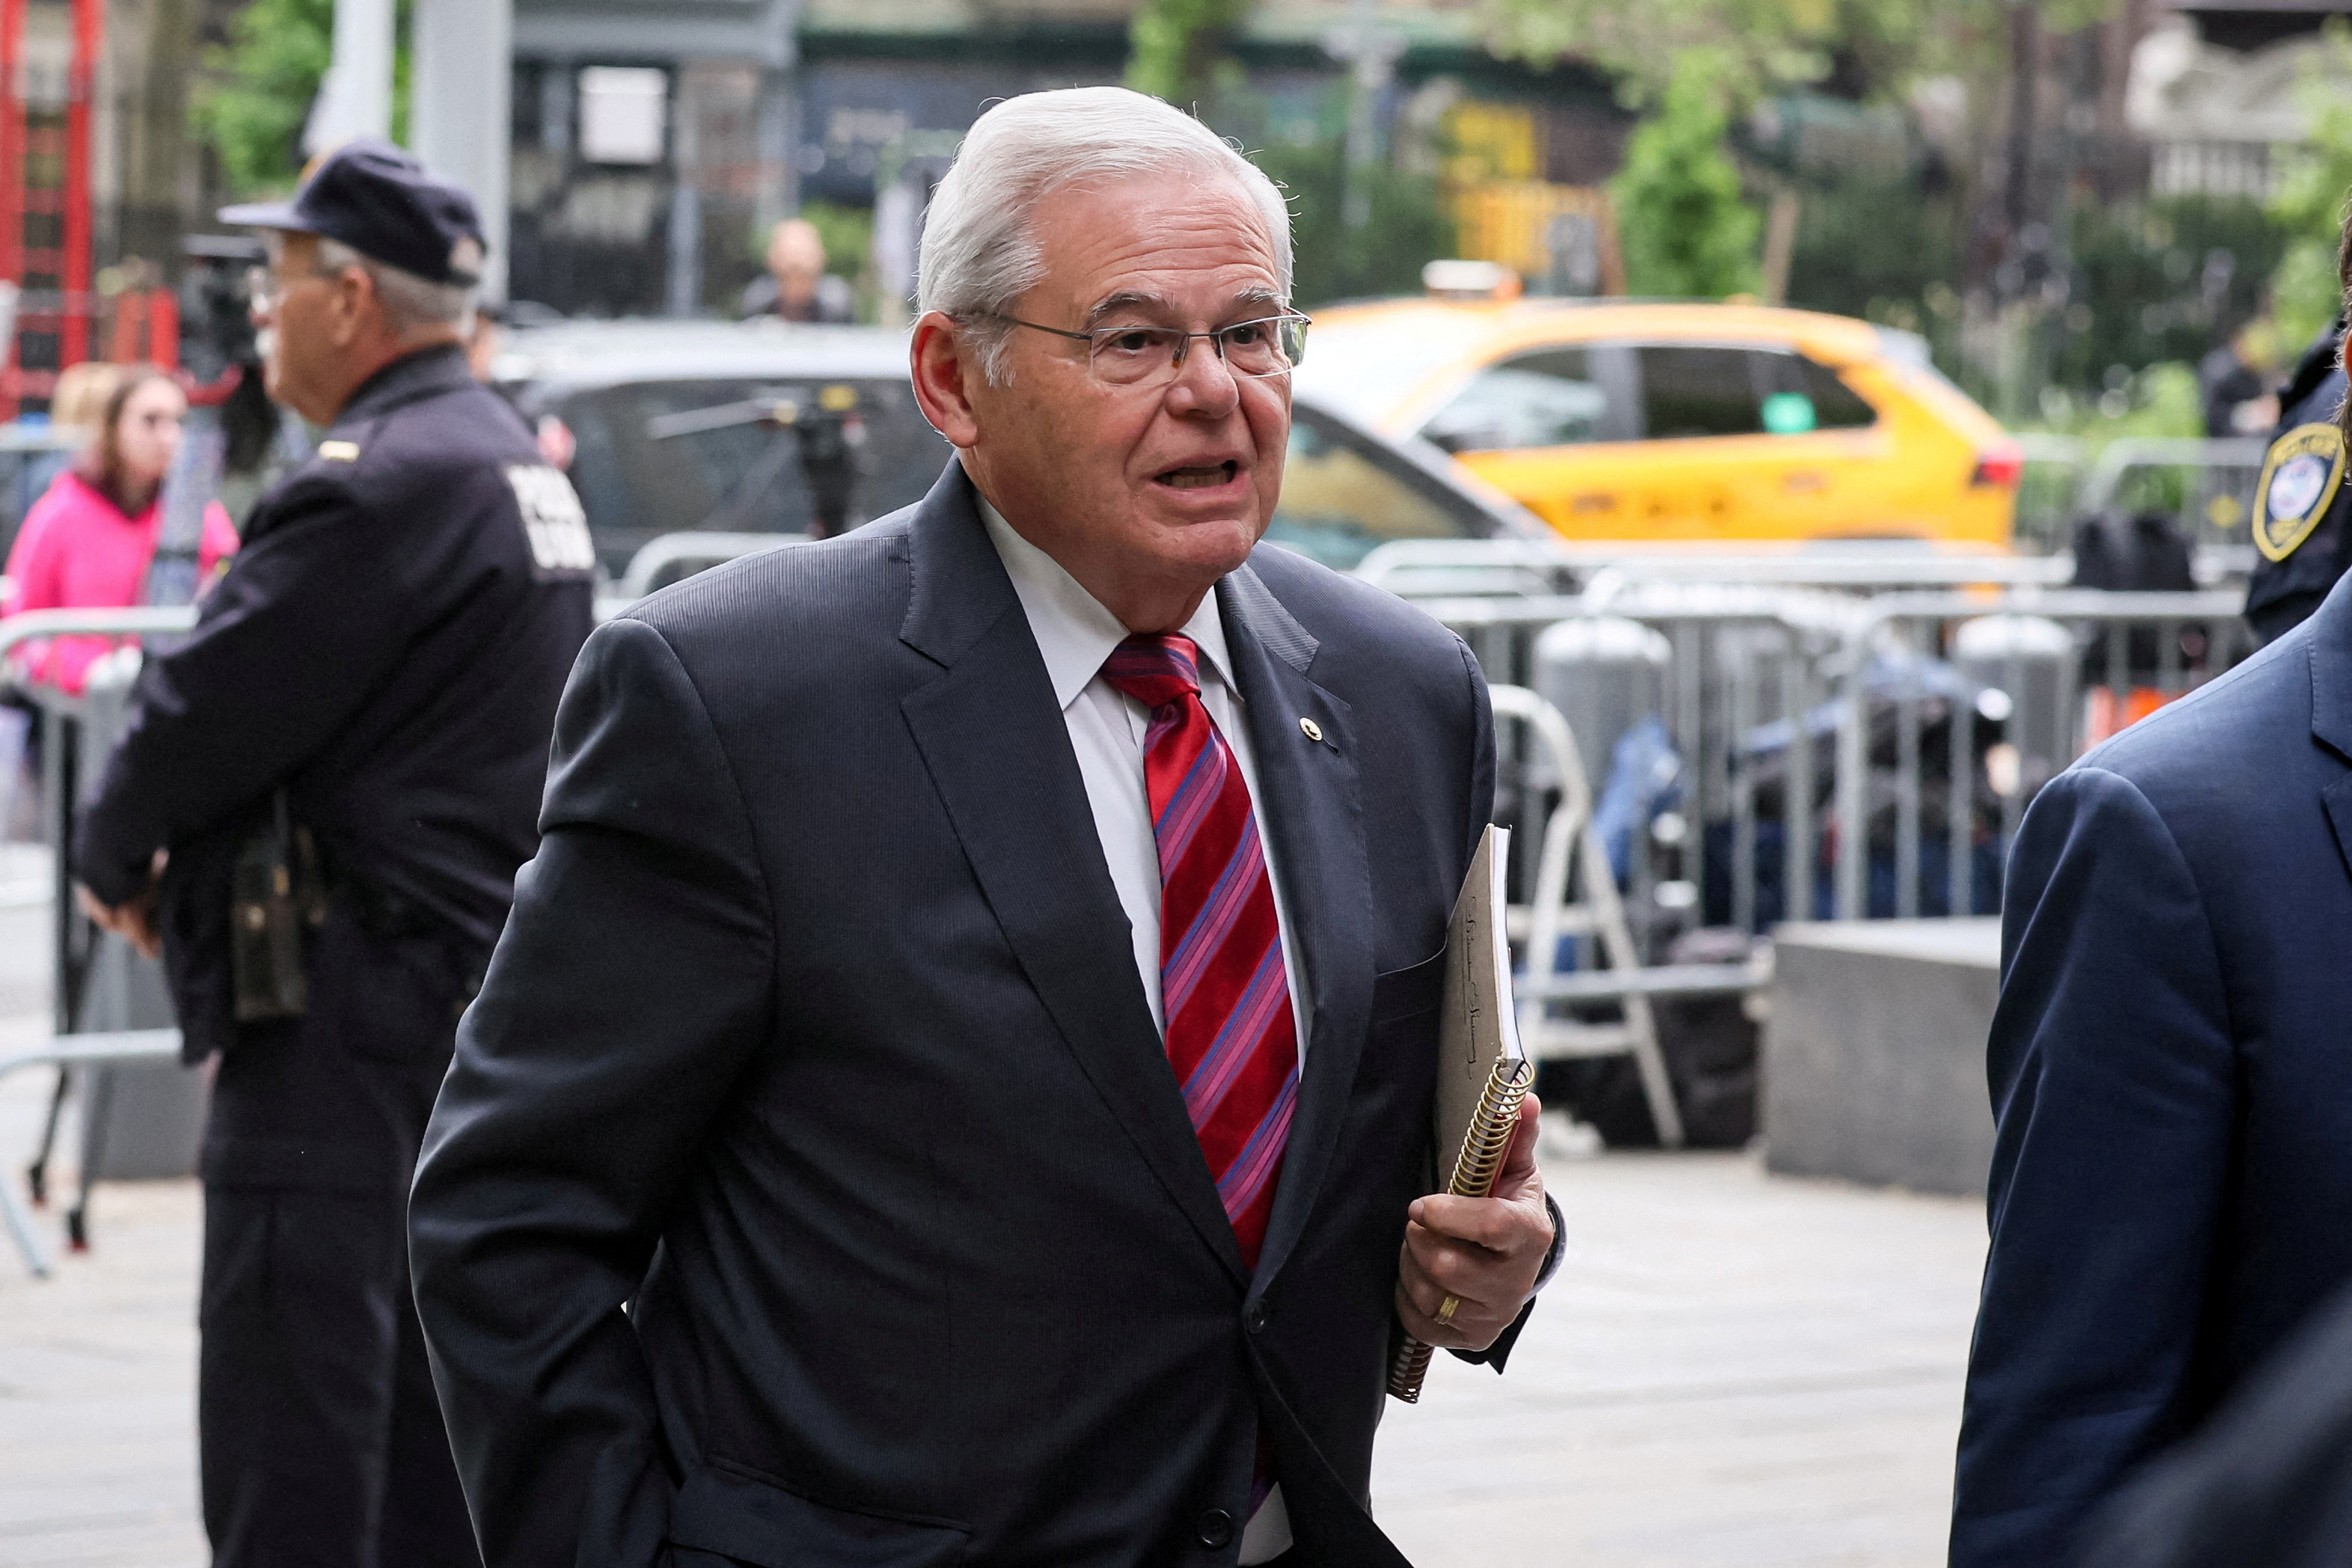 U.S. Senator Robert Menendez arrives at Federal Court for the start of his bribery trial, in New York